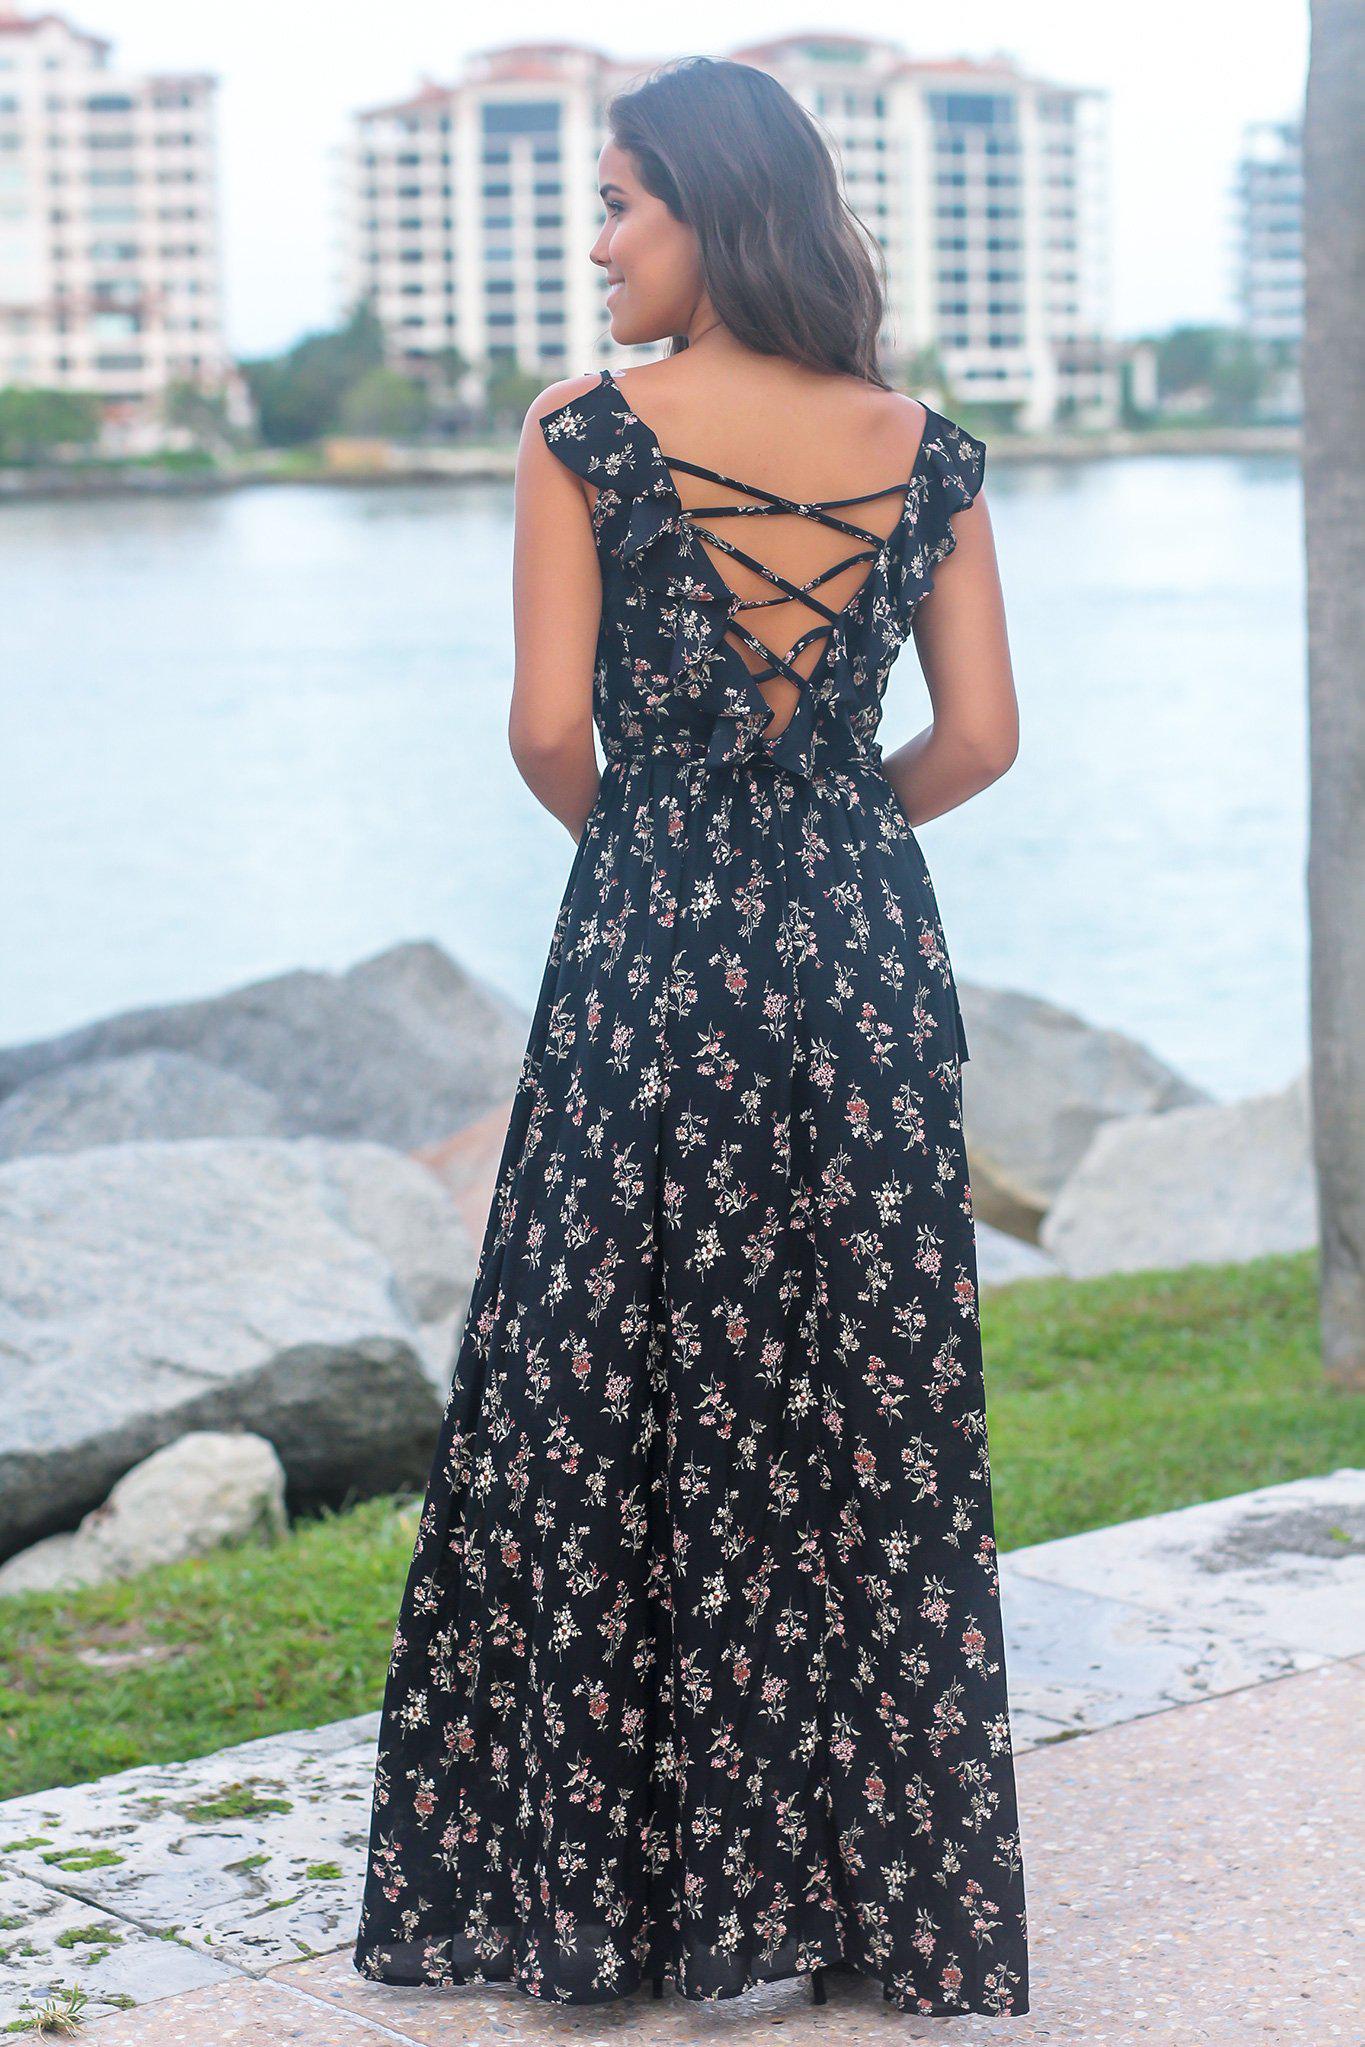 Black Floral Wrap Dress